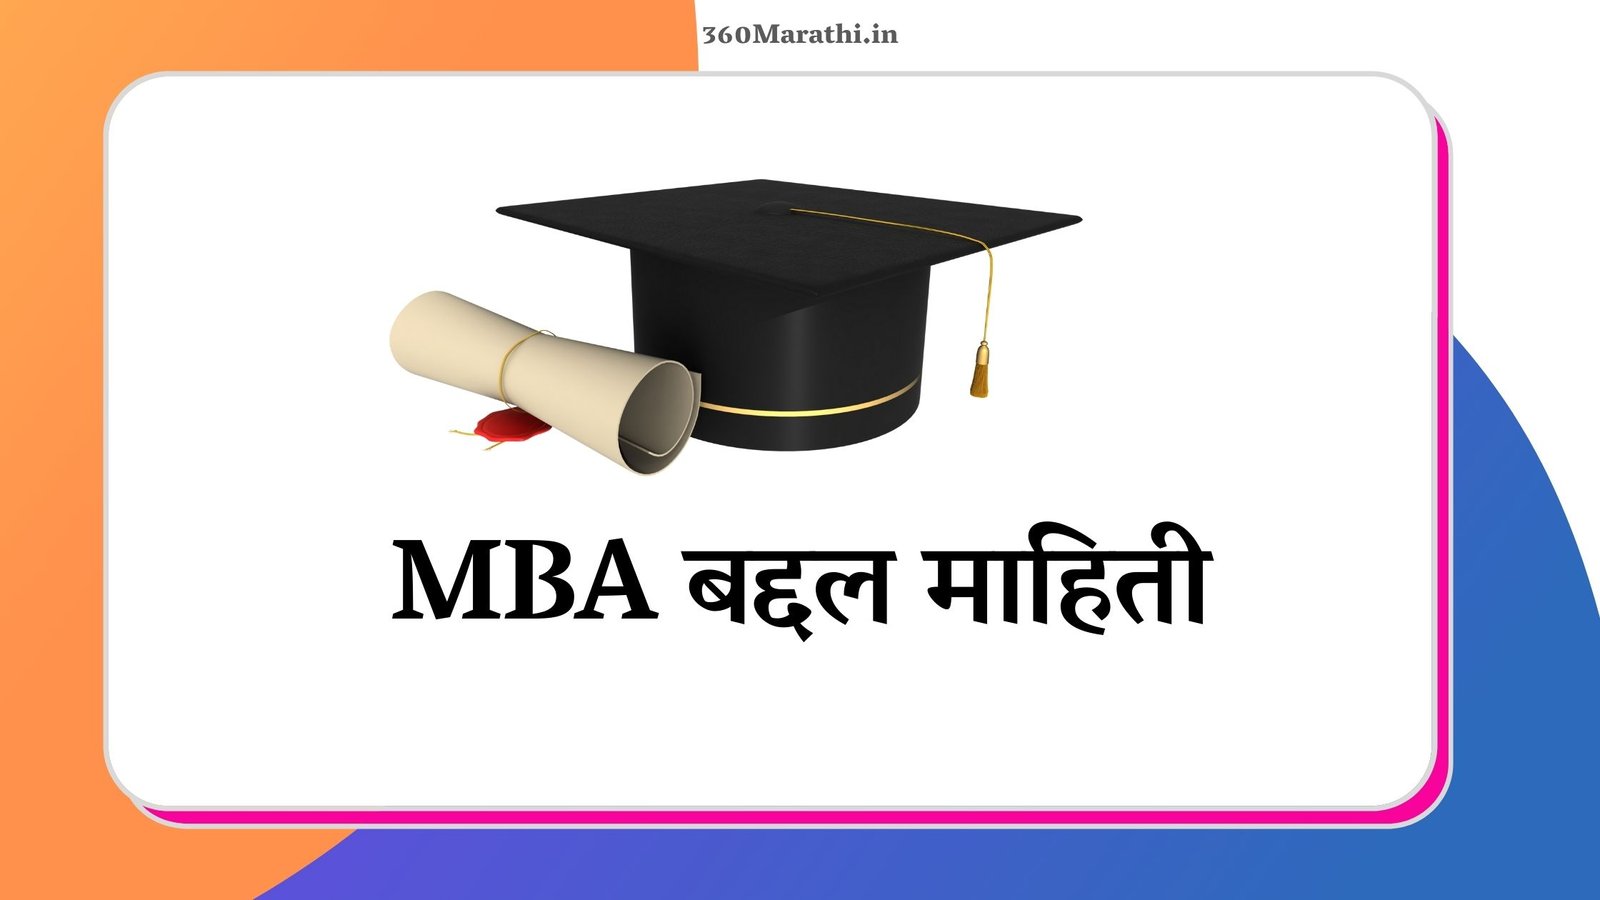 MBA information in Marathi